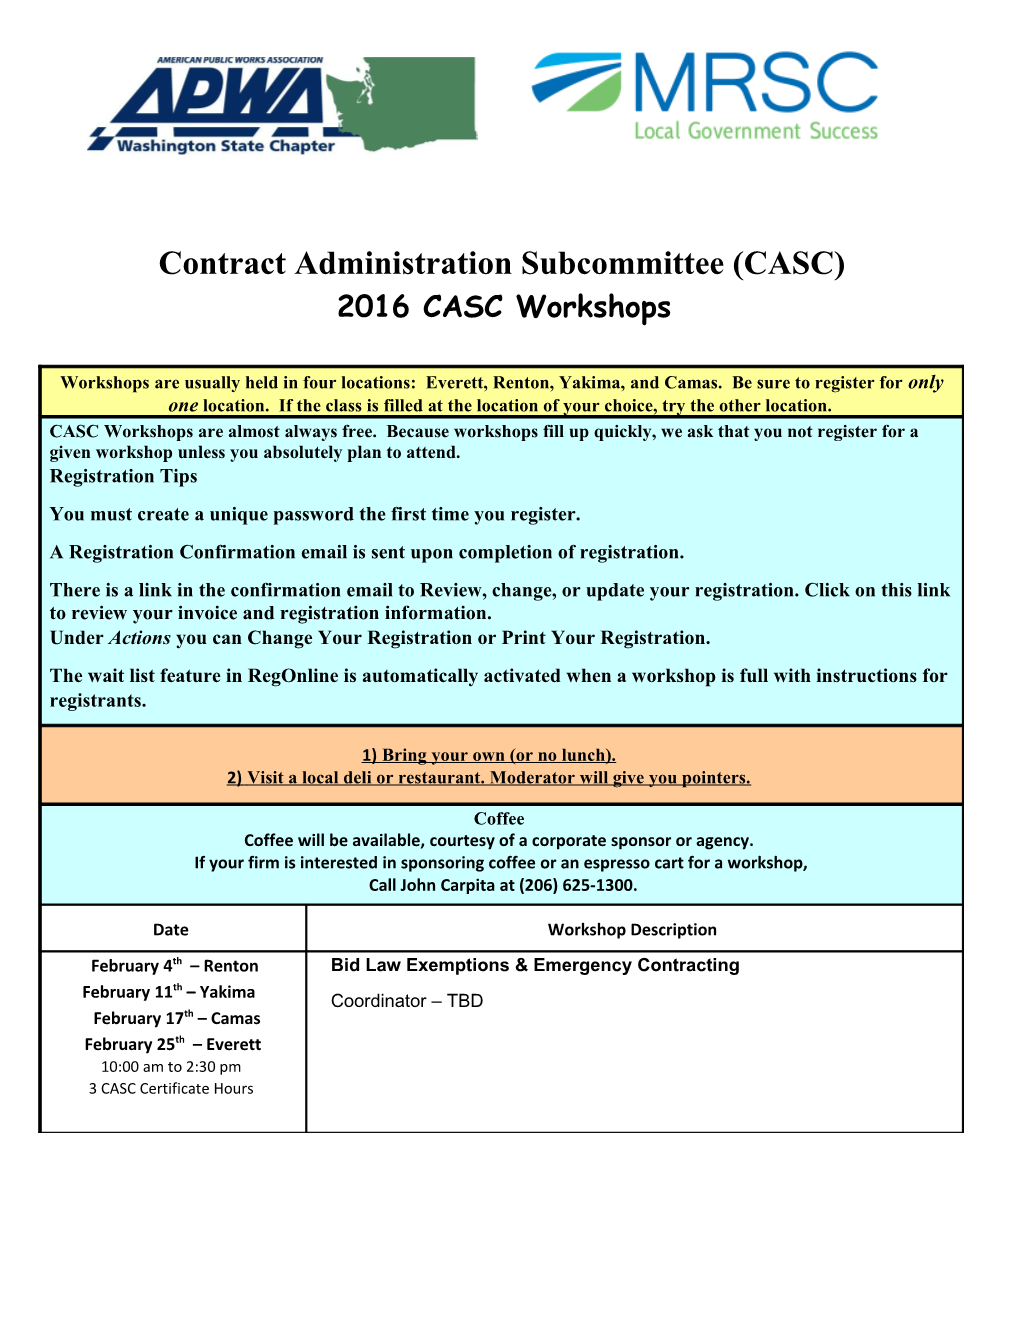 2014 CASC Workshops Schedule